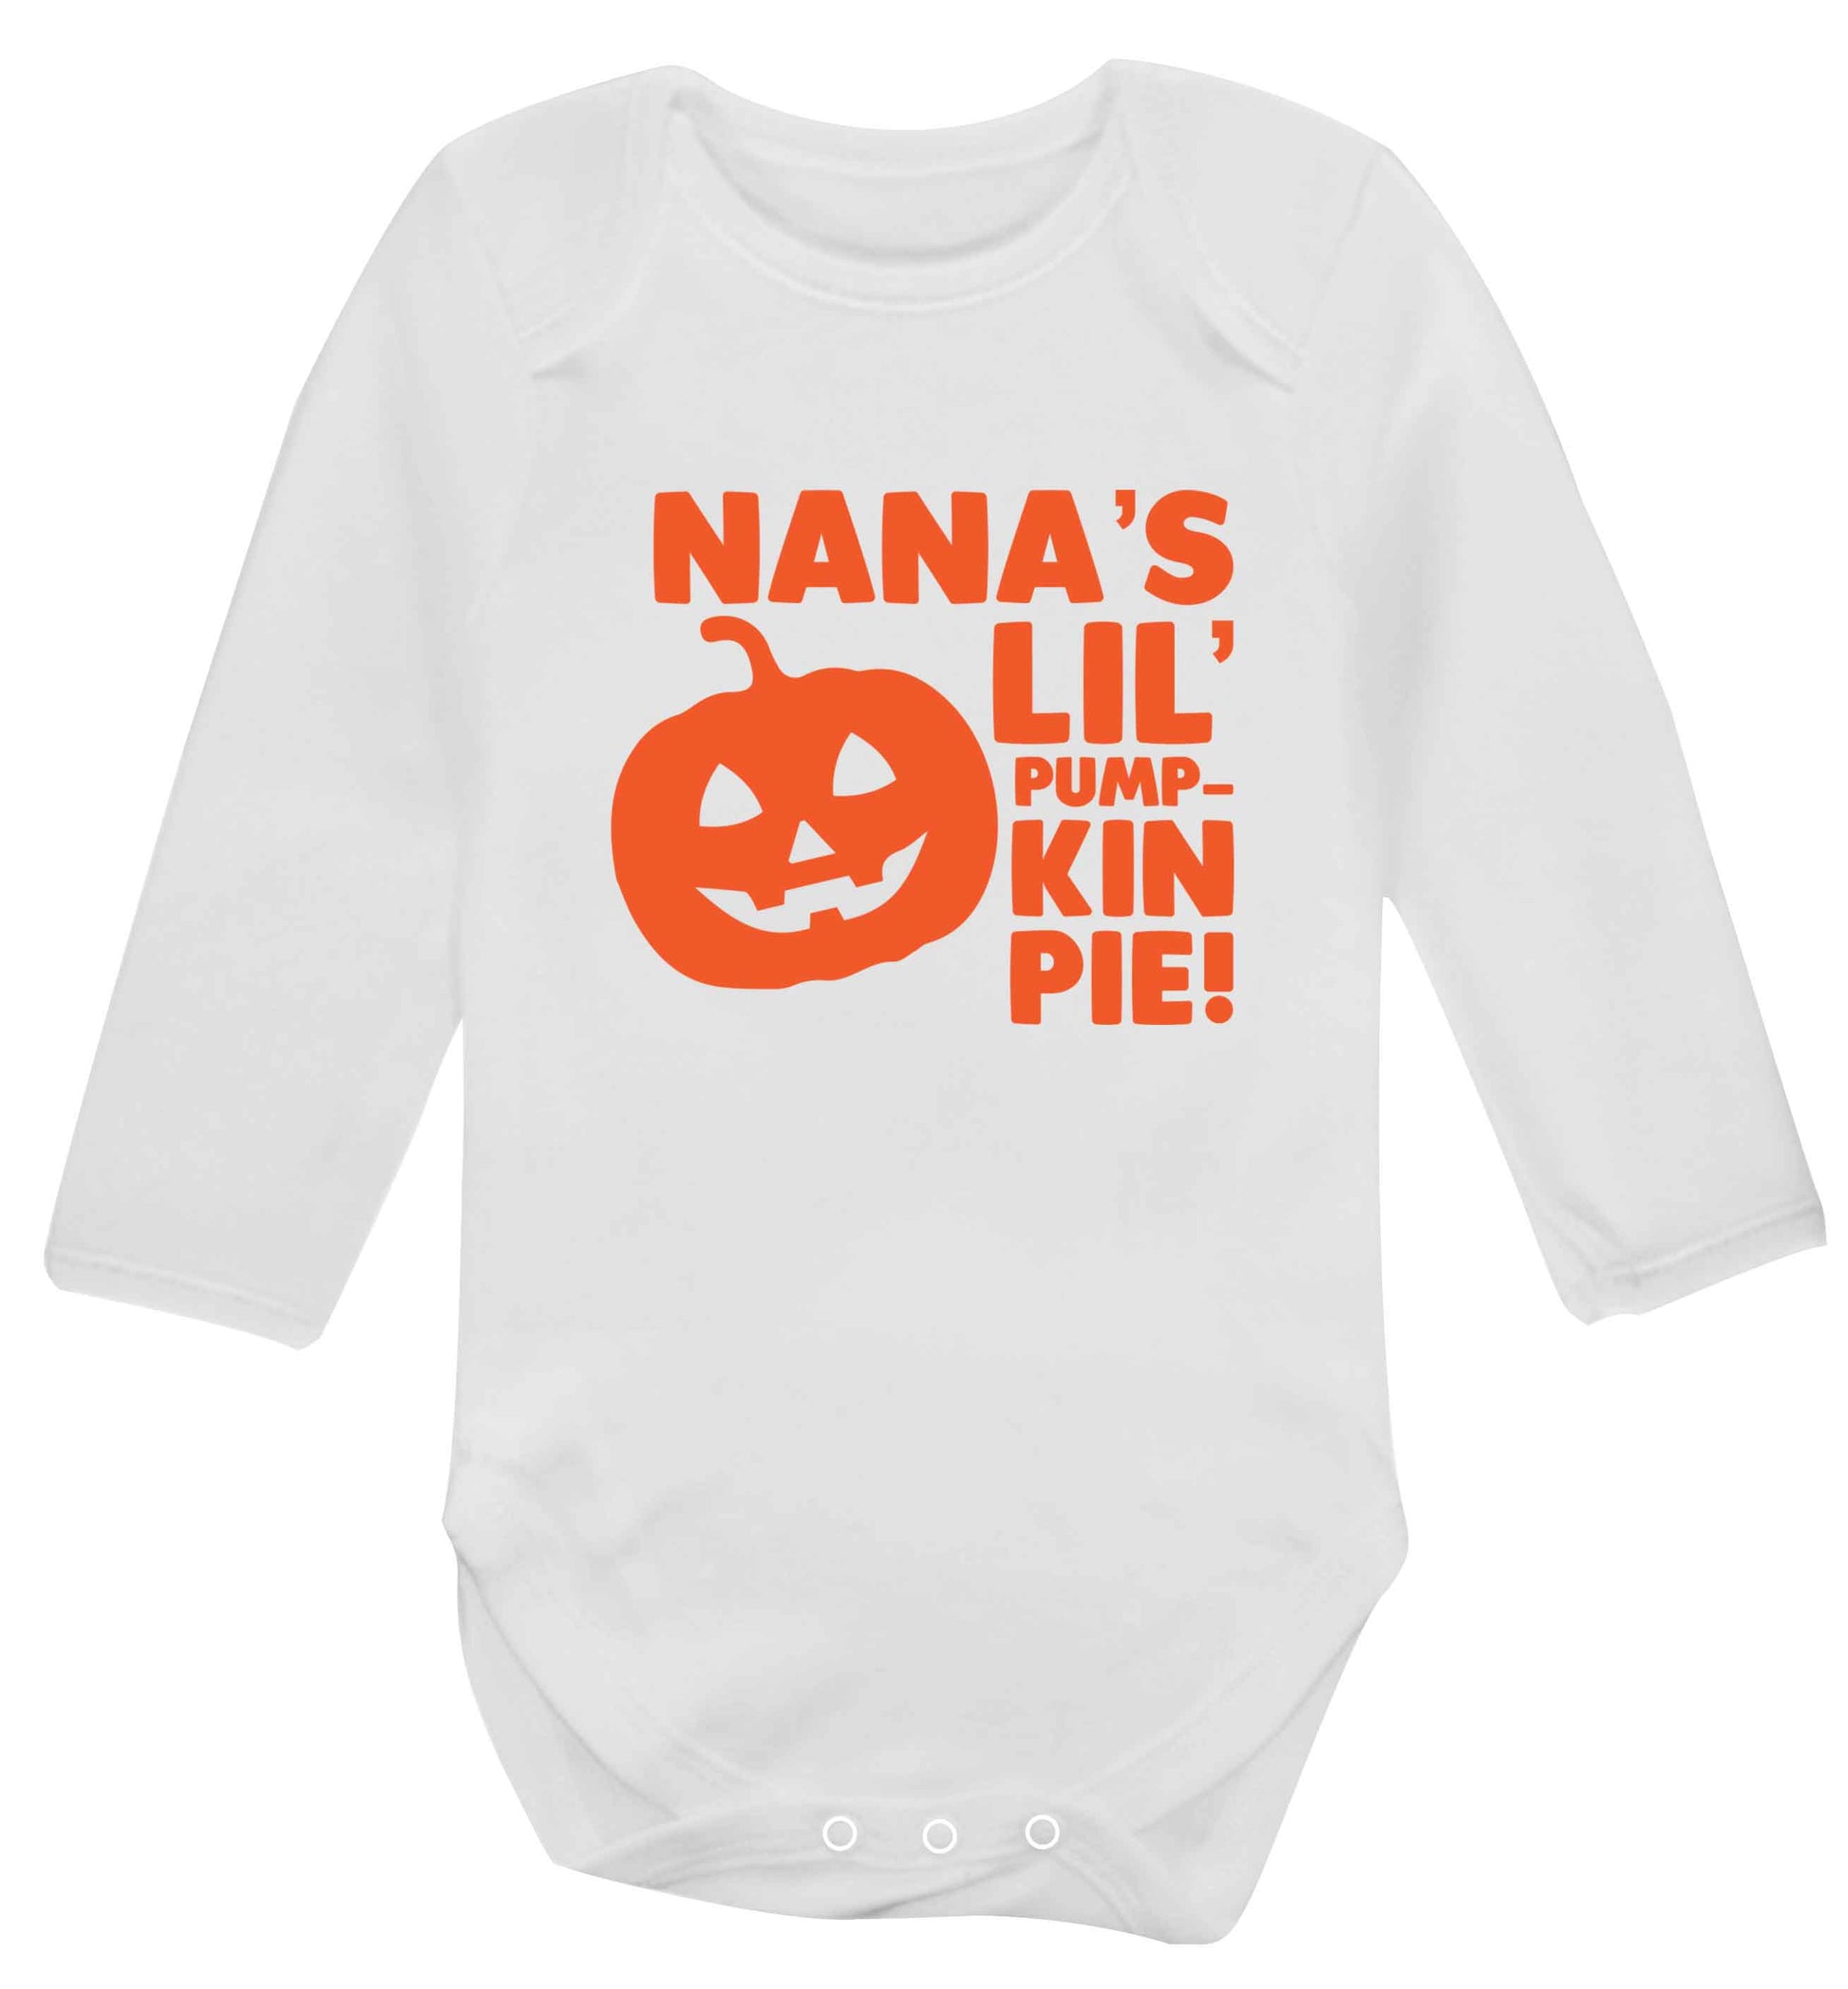 Nana's lil' pumpkin pie baby vest long sleeved white 6-12 months